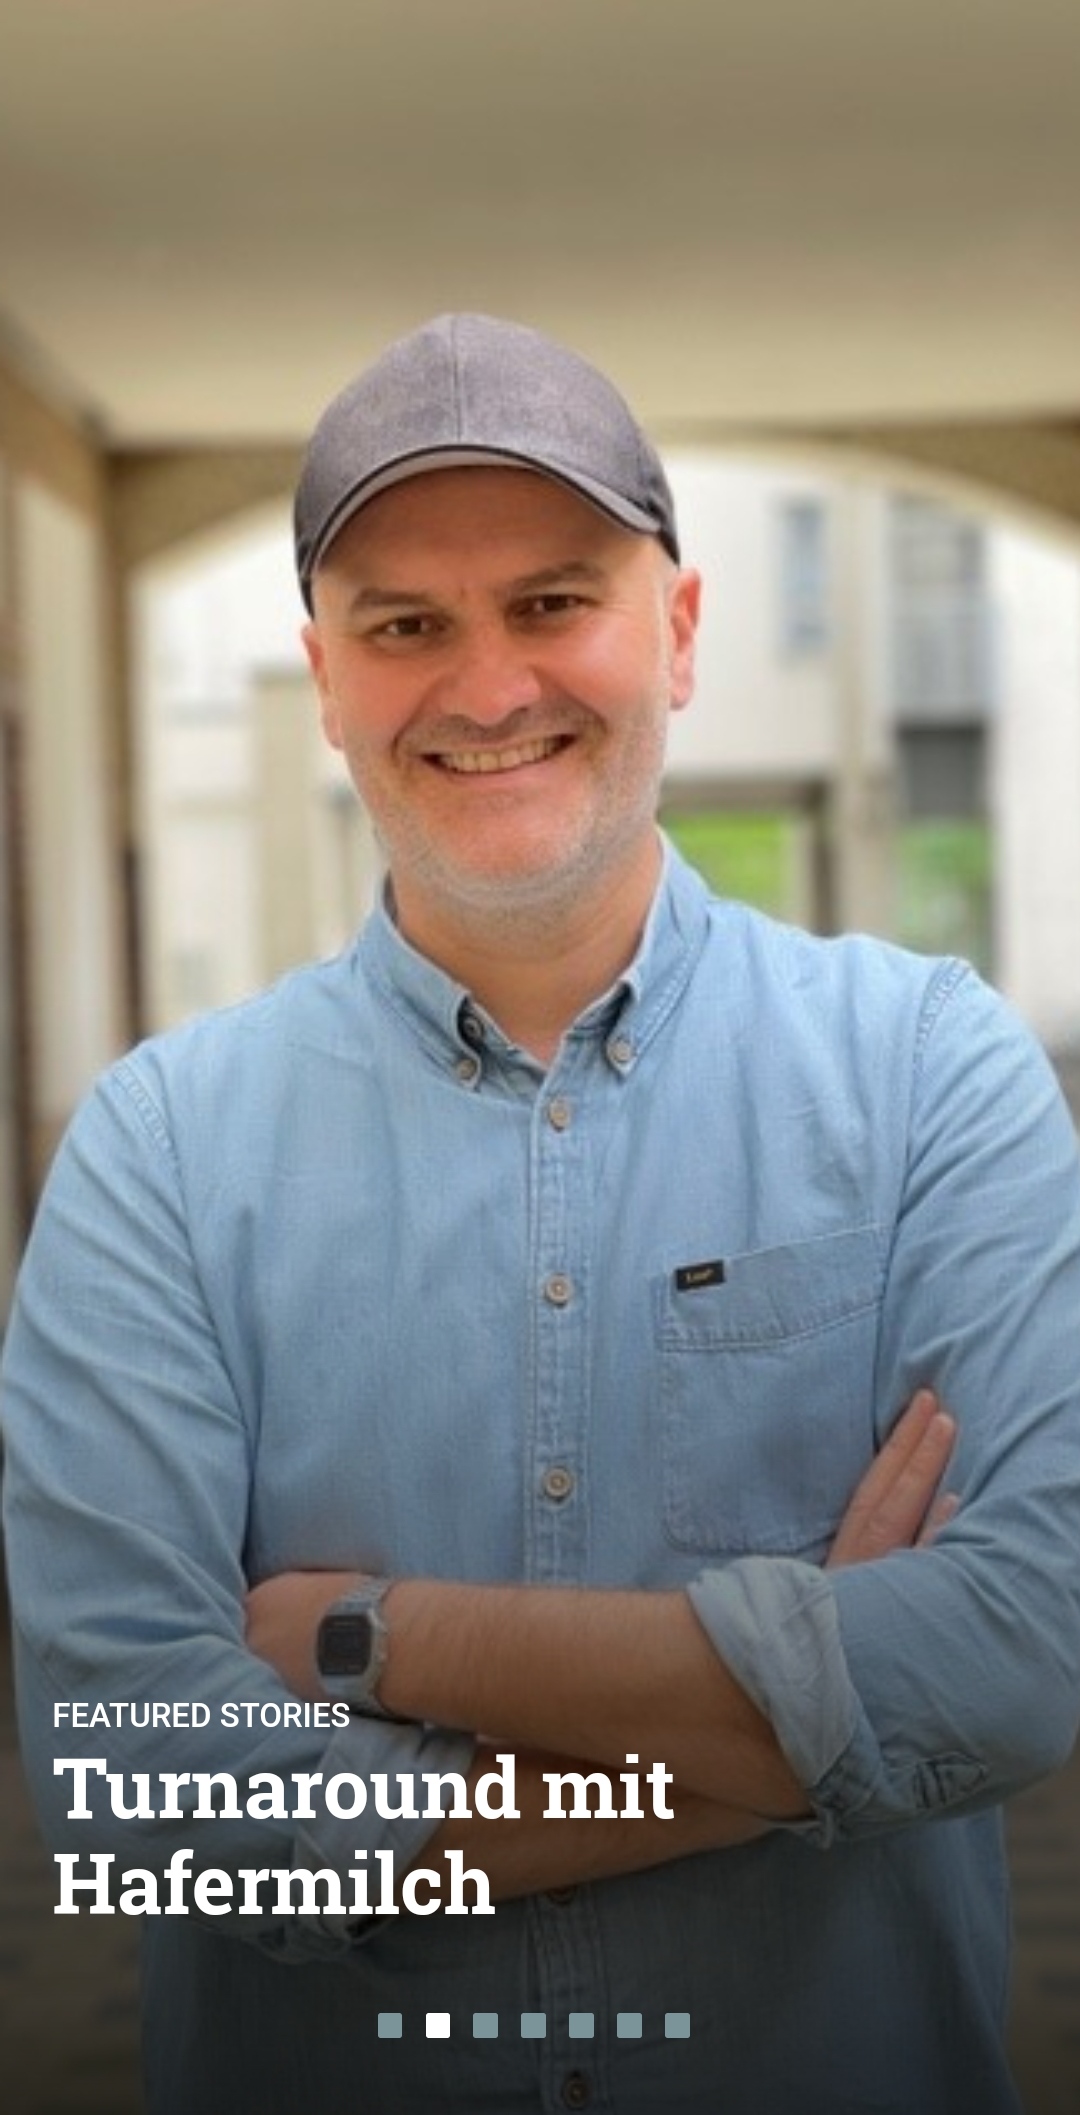 Executive Producer Daniel Maiterth